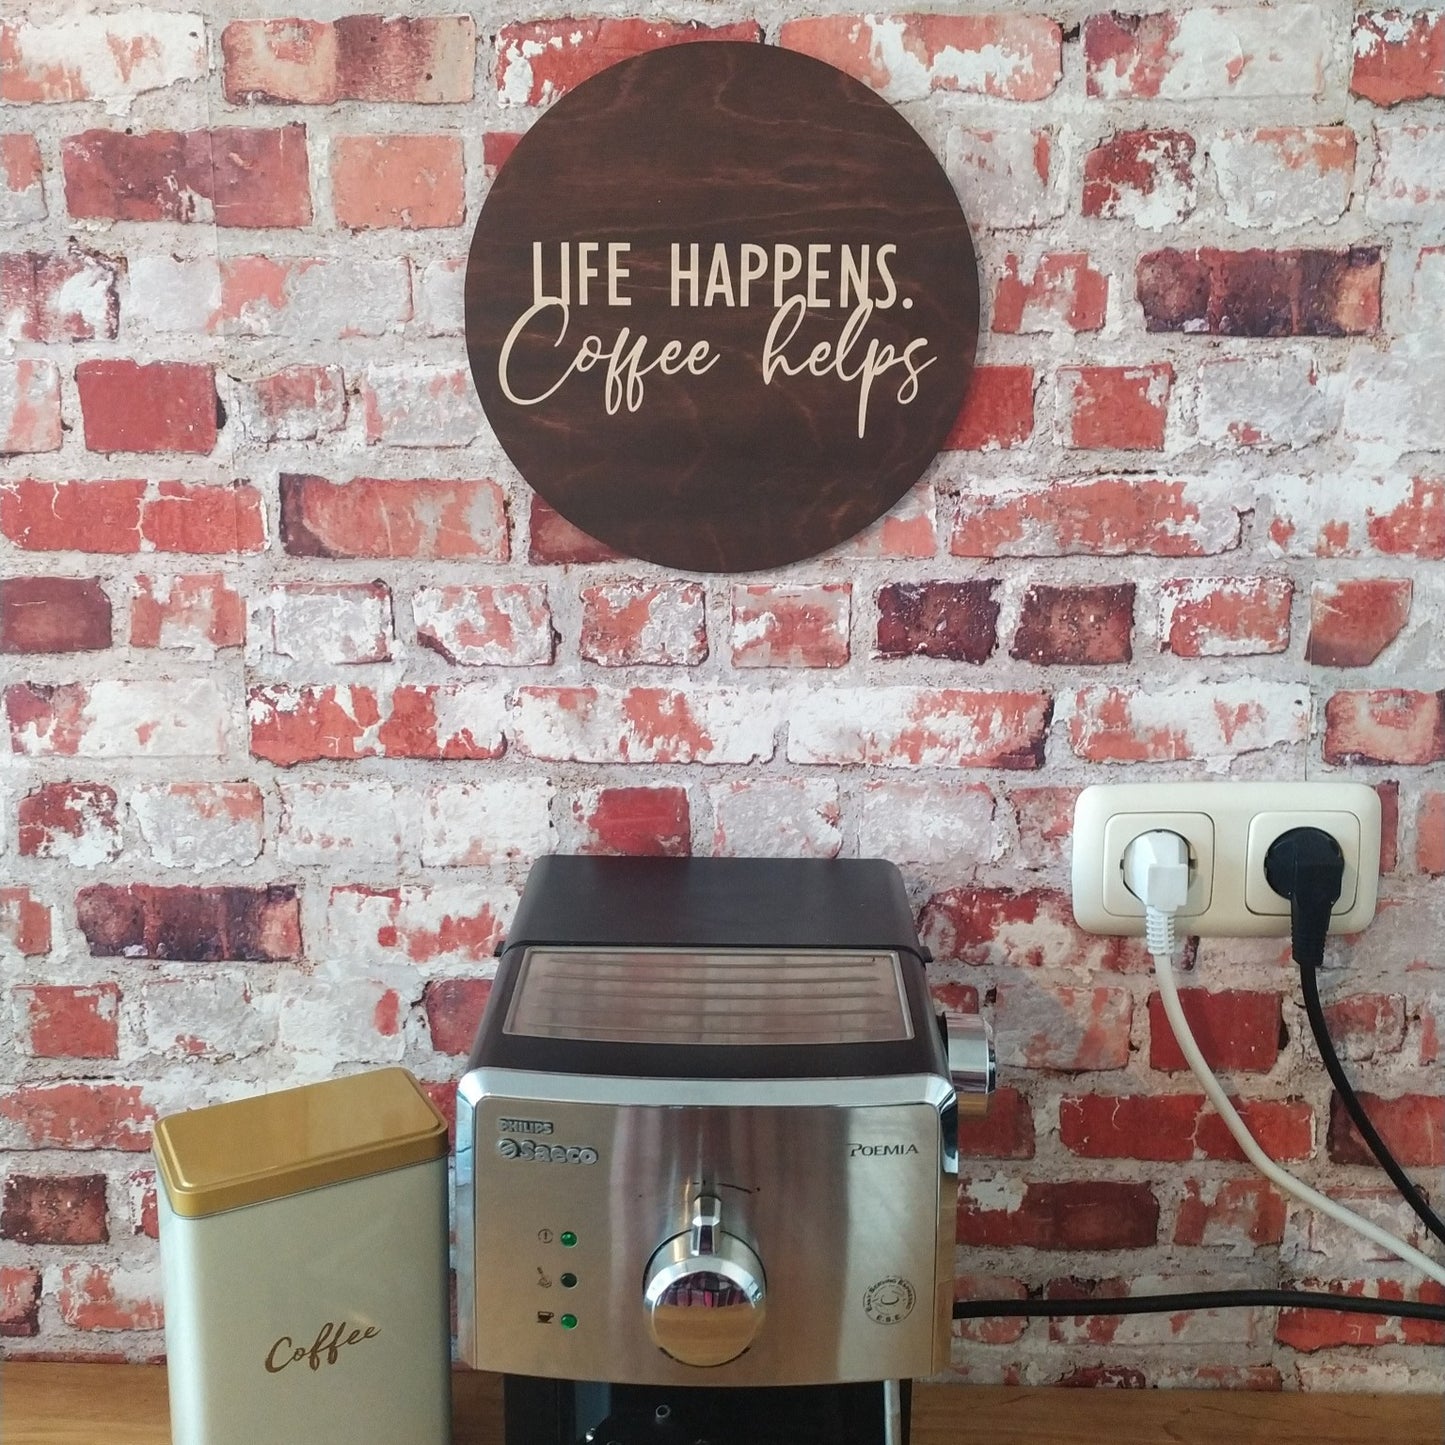 Life happens. Coffee helps.